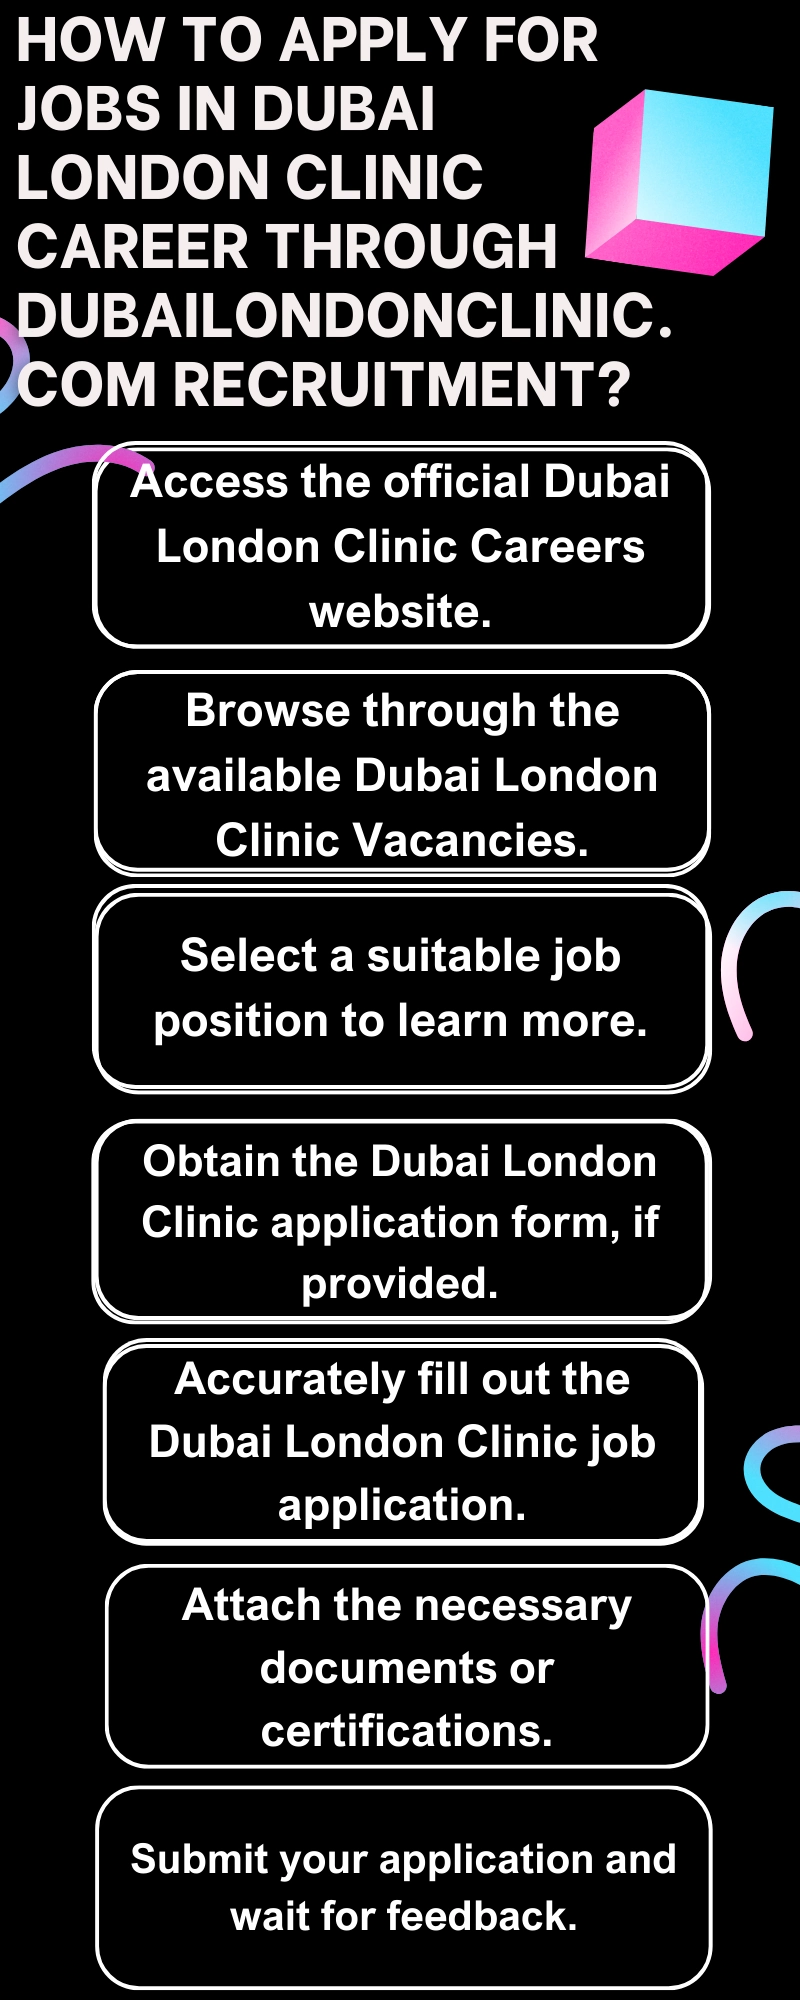 How to Apply for Jobs in Dubai London Clinic Career through dubailondonclinic.com recruitment?